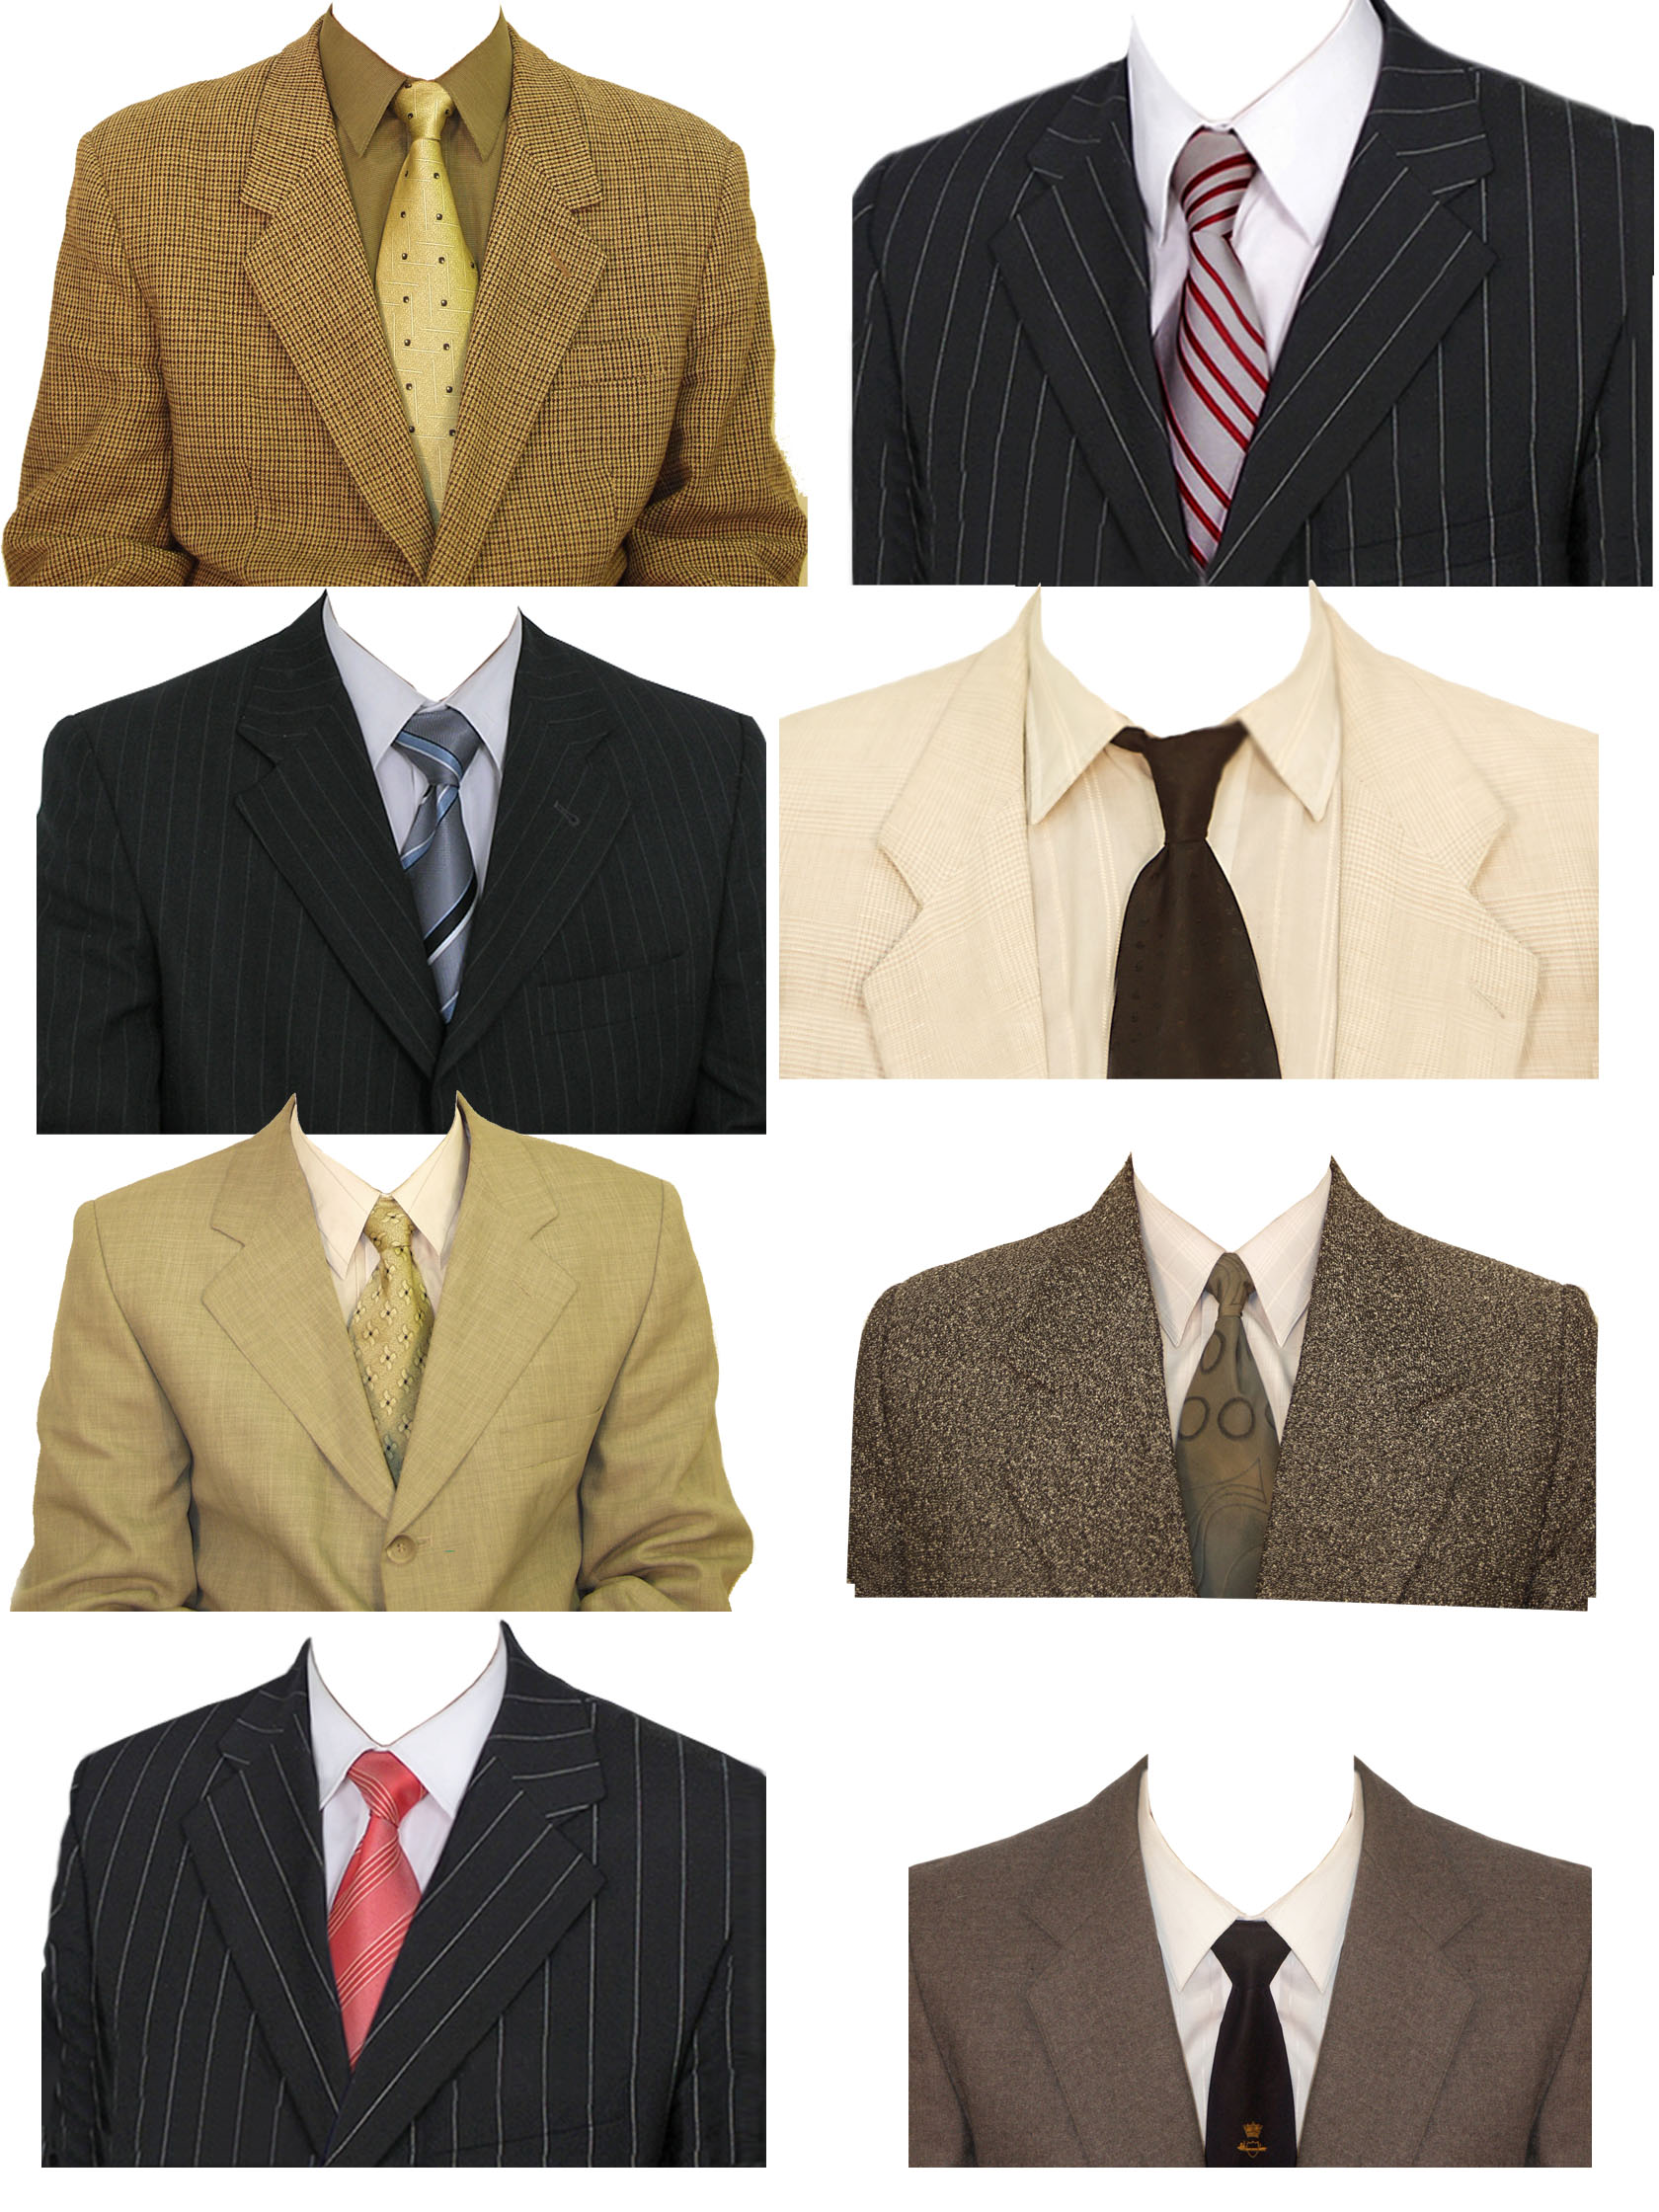 8 мужских костюмов для идентификации фото шаблонов макетов